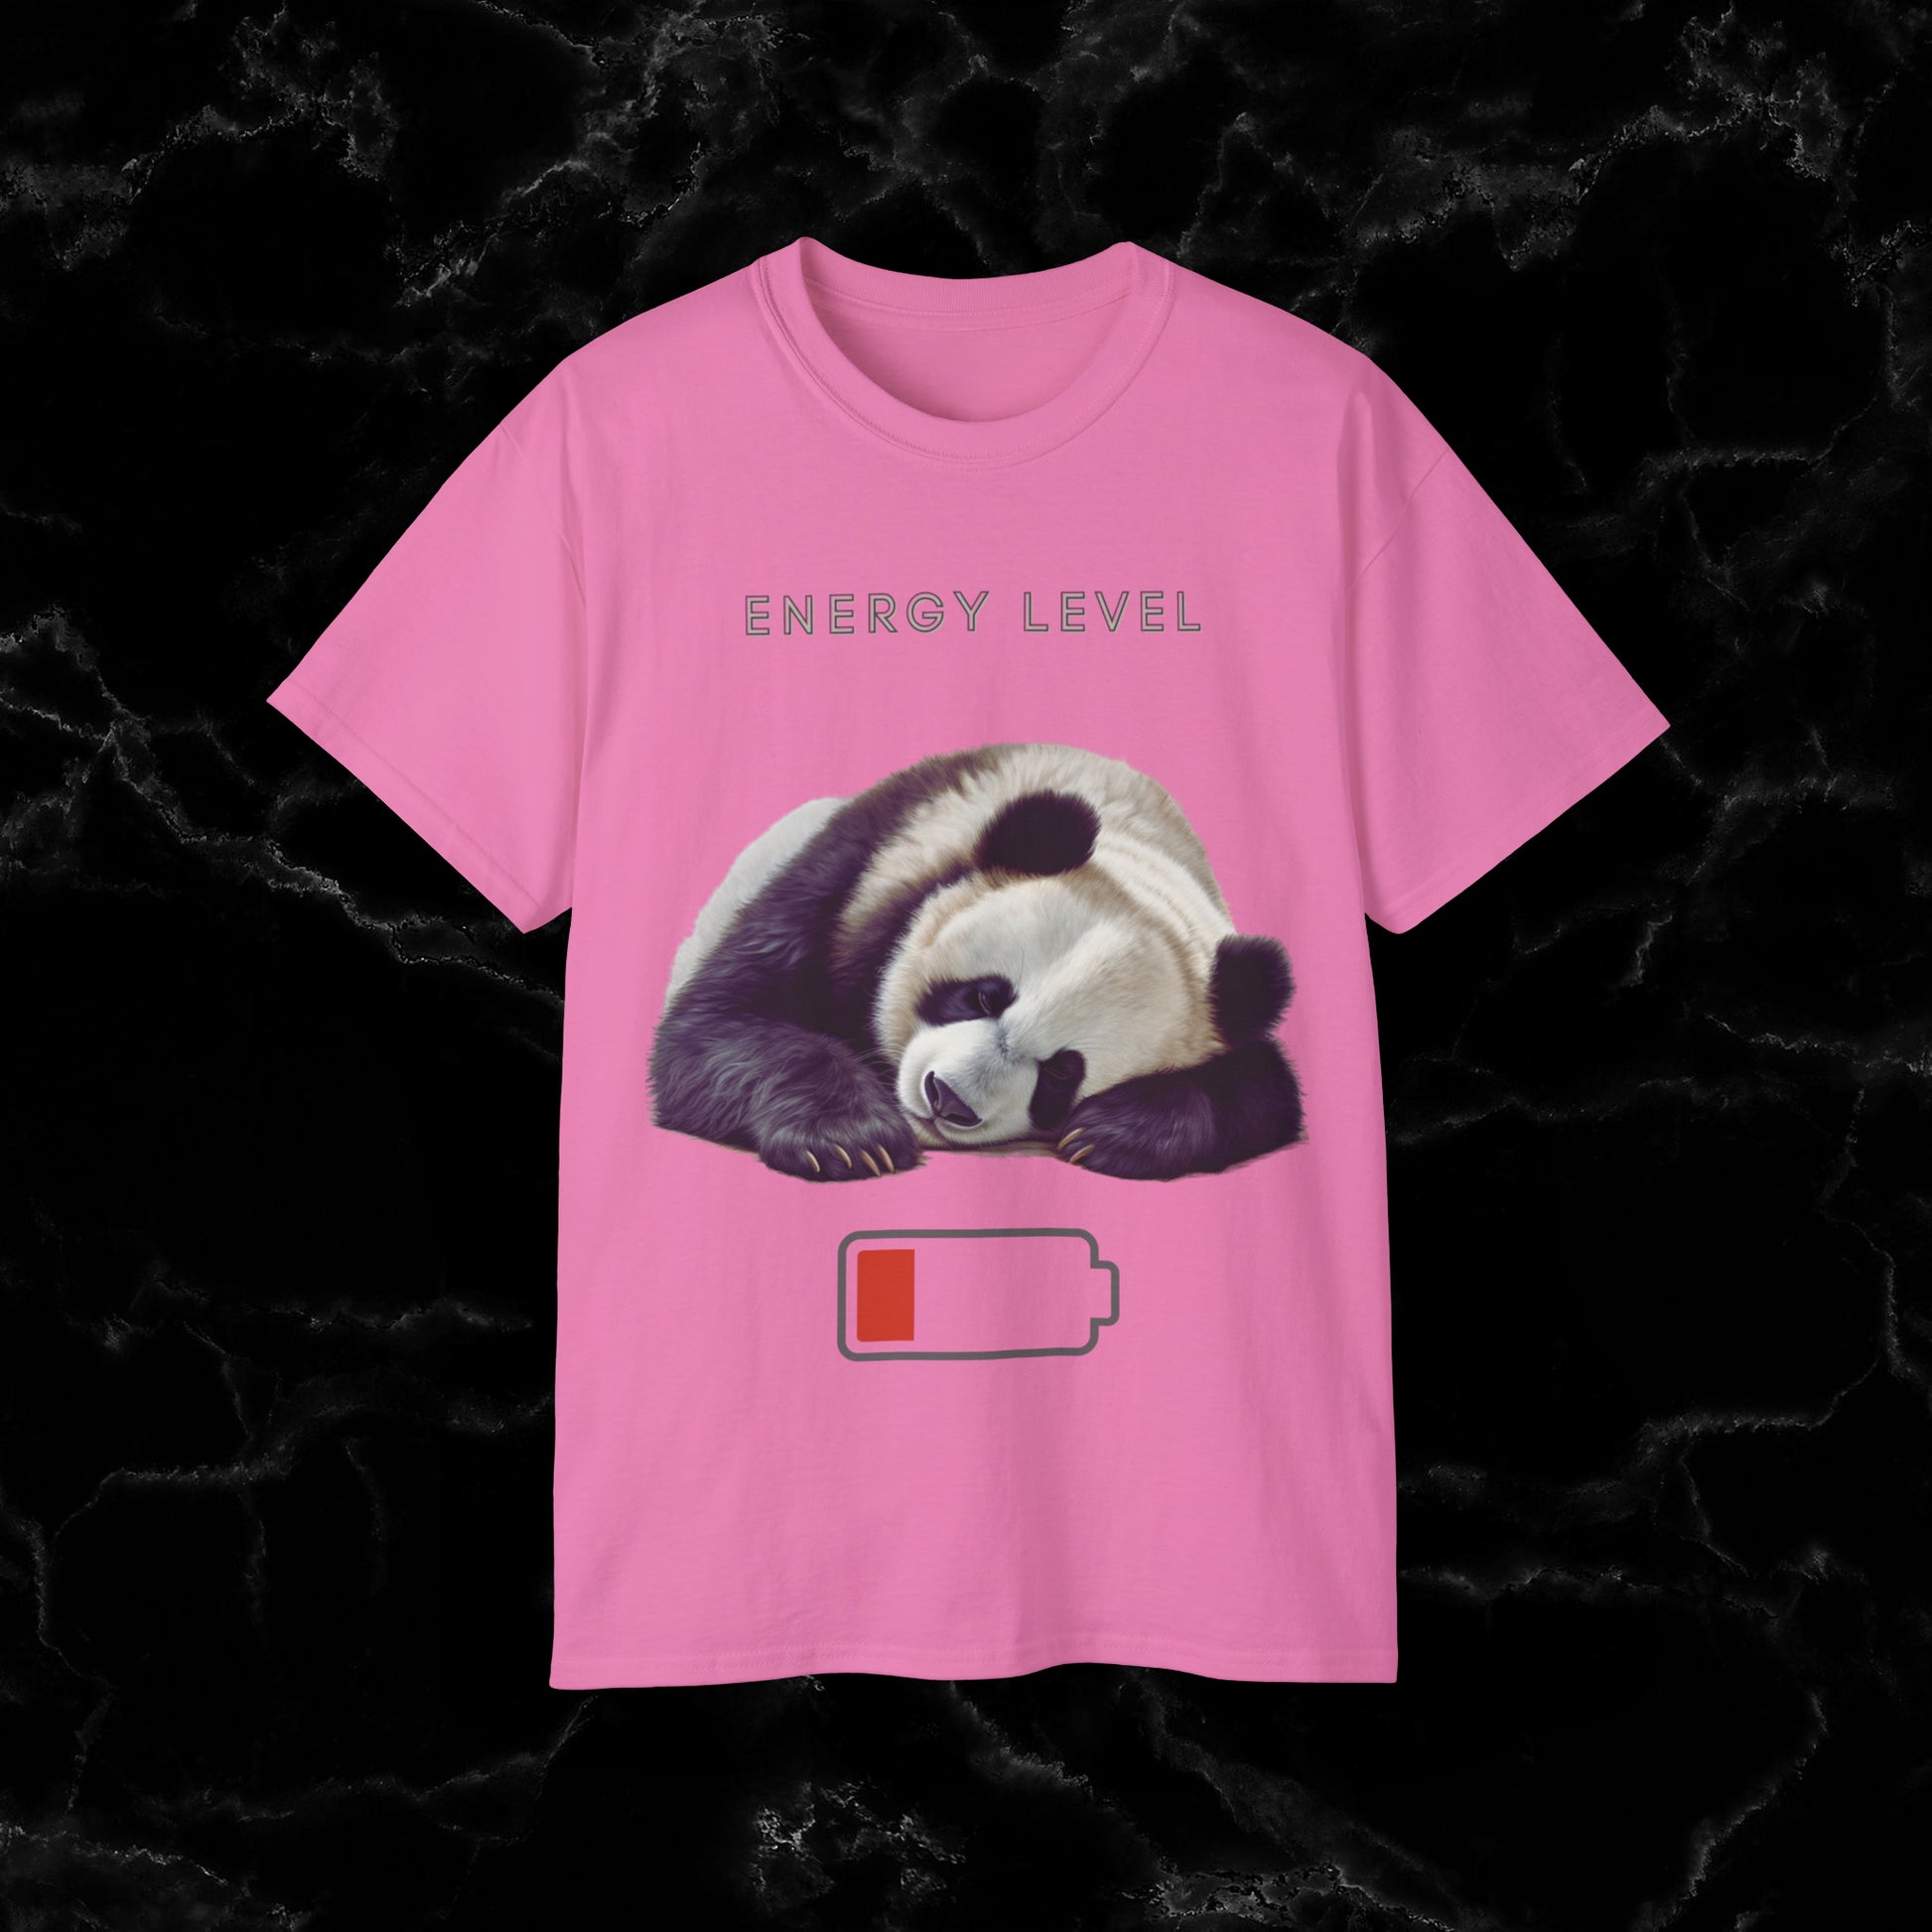 Nap Time Panda Unisex Funny Tee - Hilarious Panda Nap Design - Energy Level T-Shirt Azalea S 